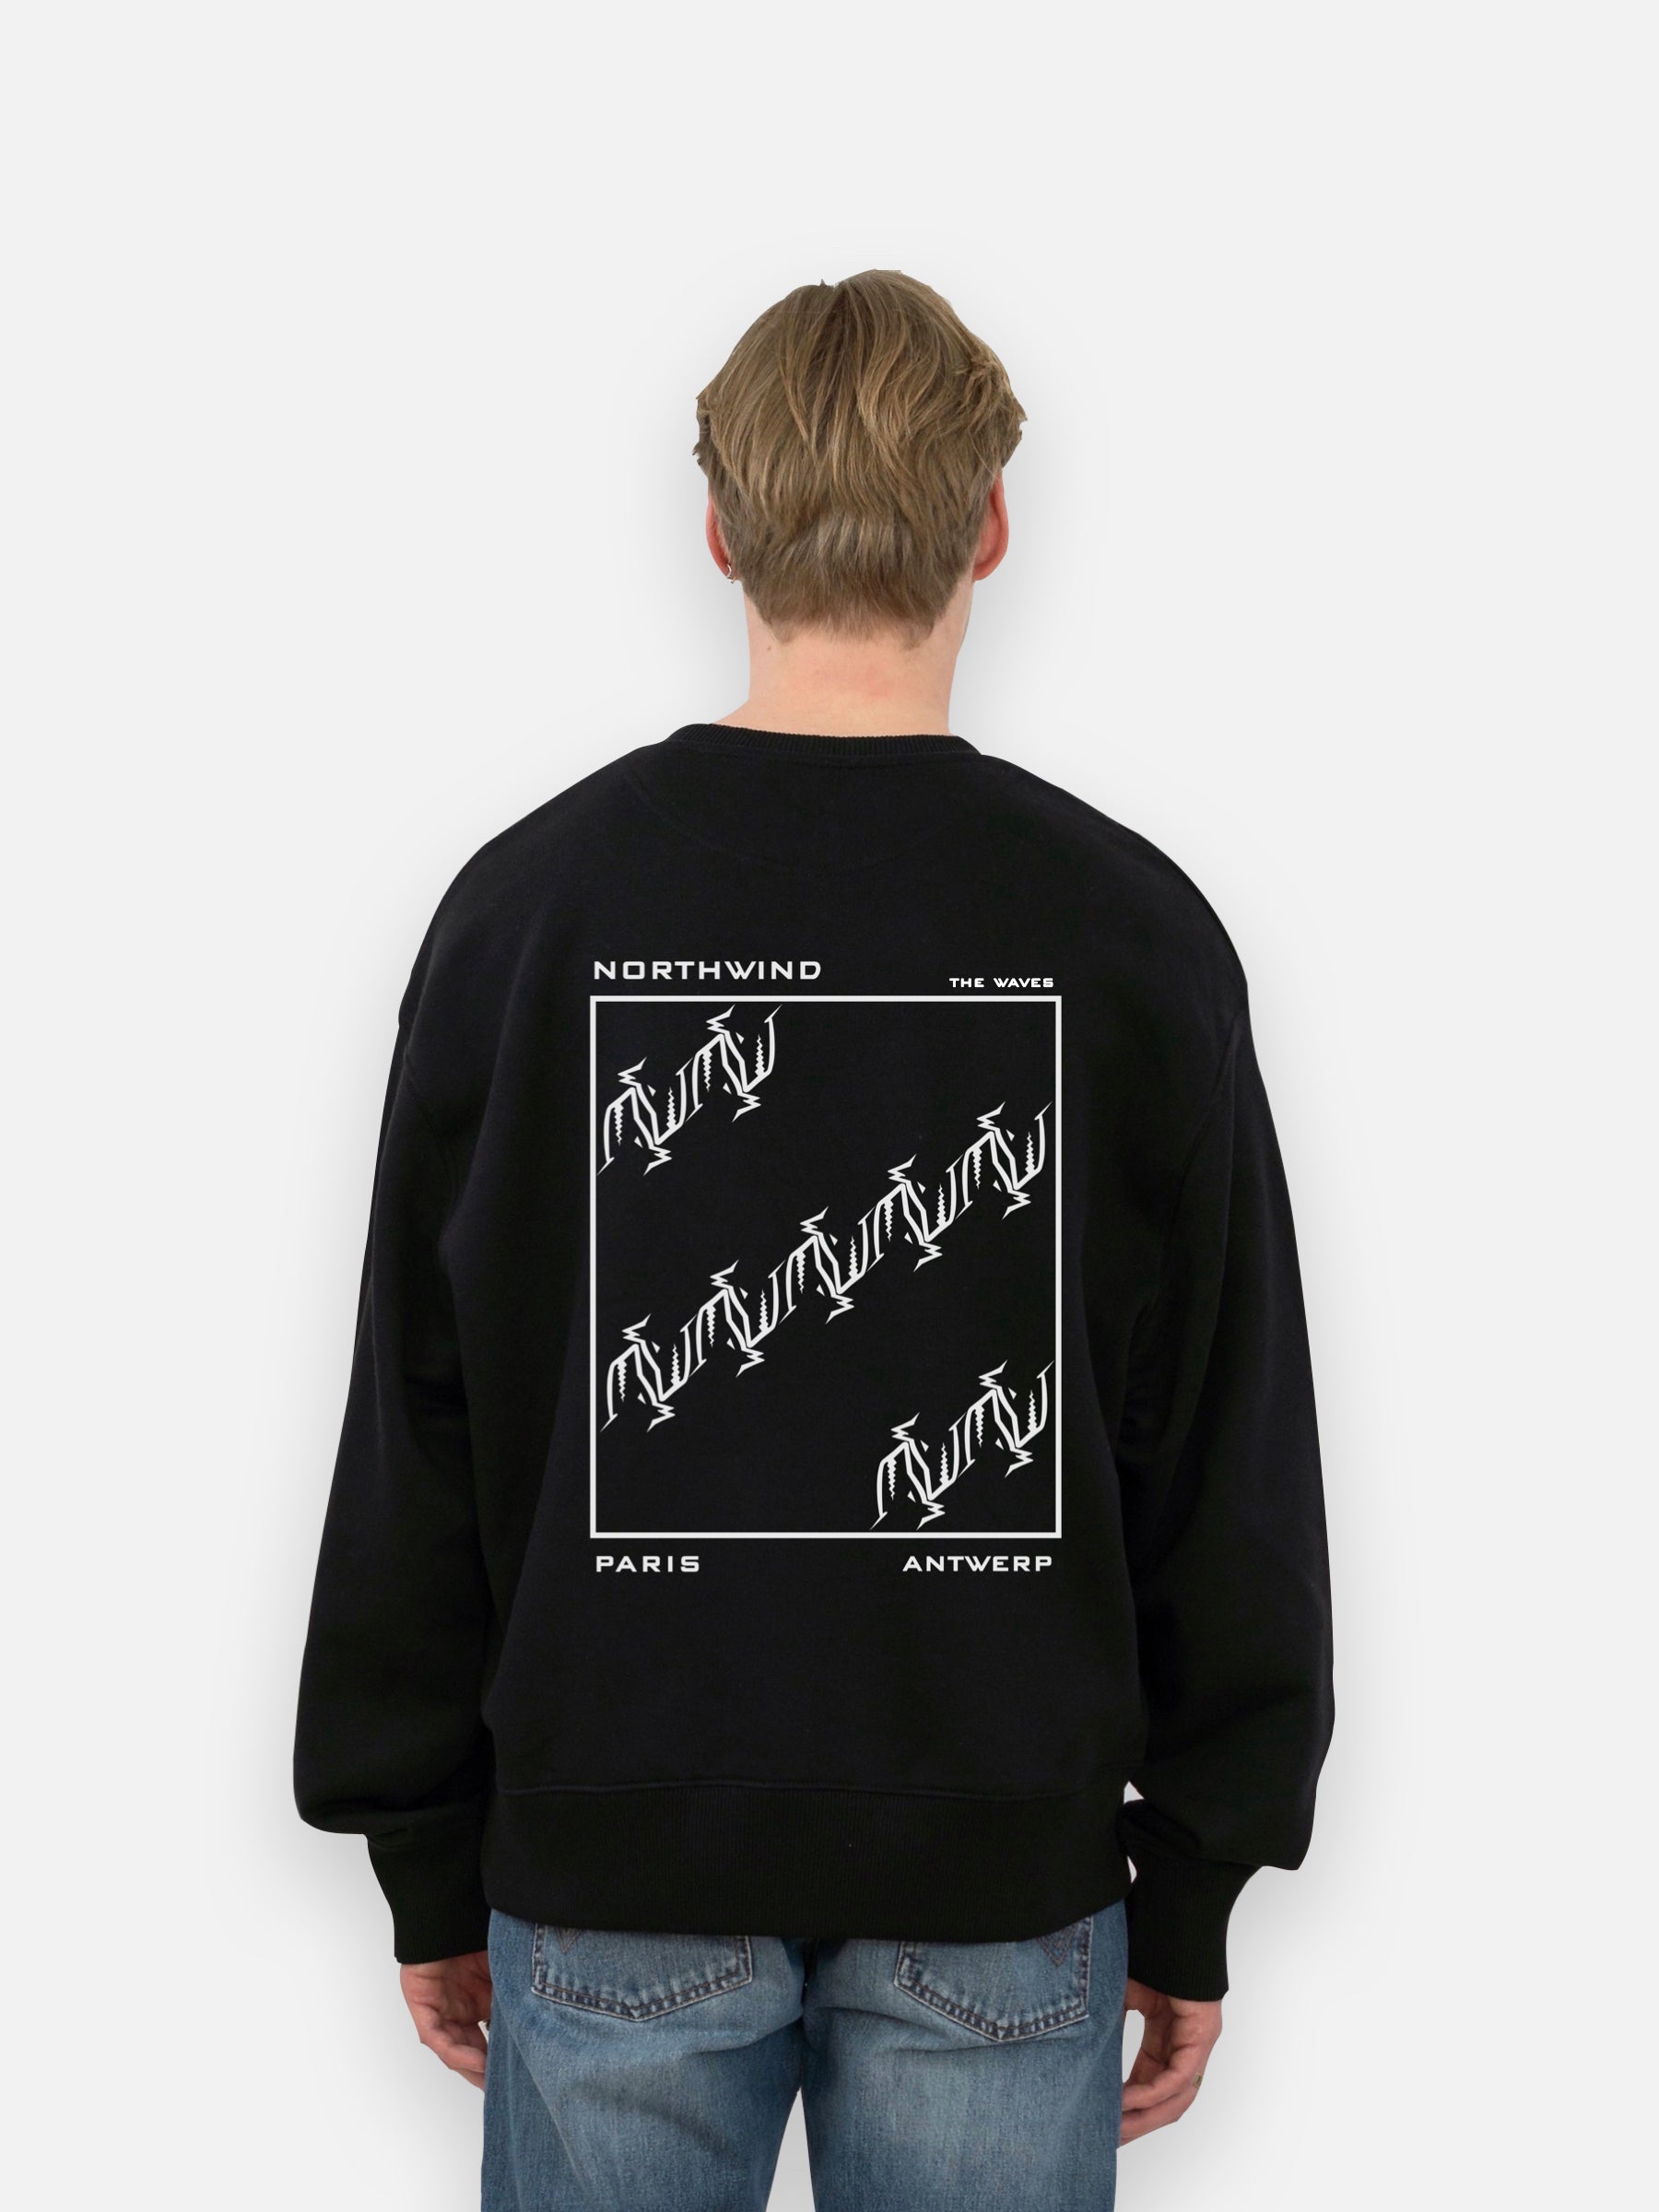 The Waves Sweatshirt - Black